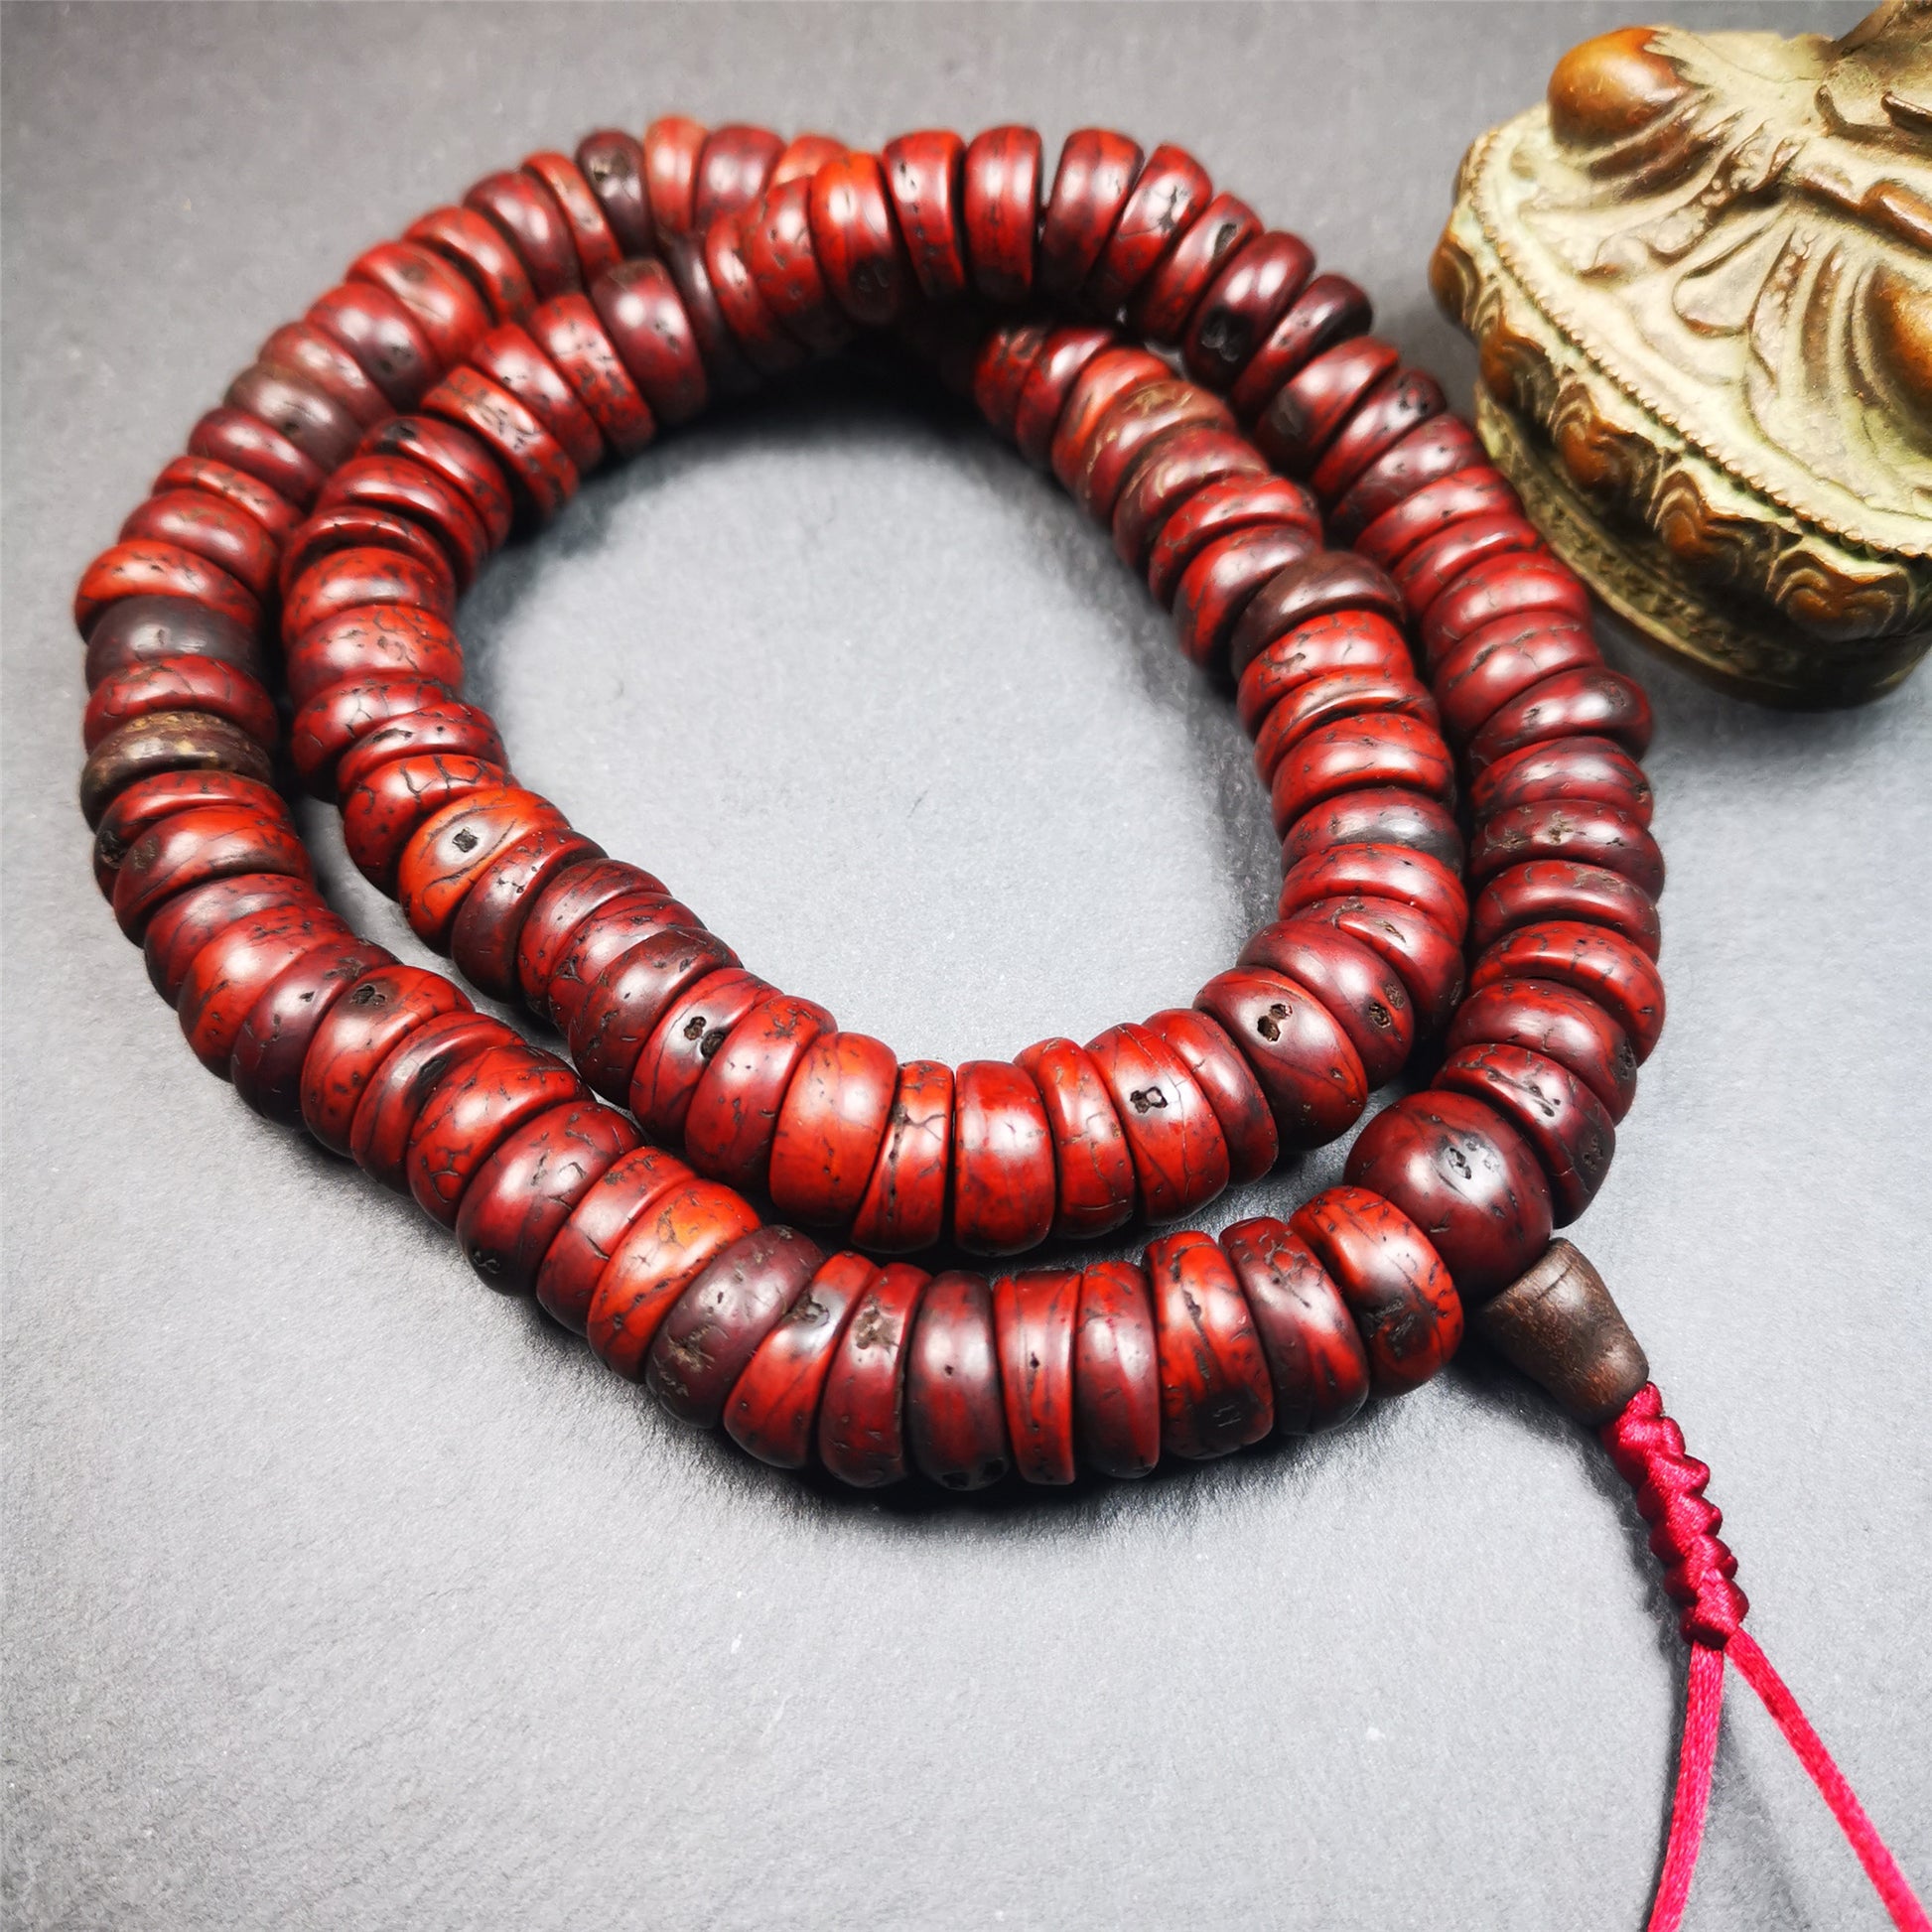 Gandhanra Old 108 Bodhi Seed Beads Mala,13mm Prayer Beads Necklace